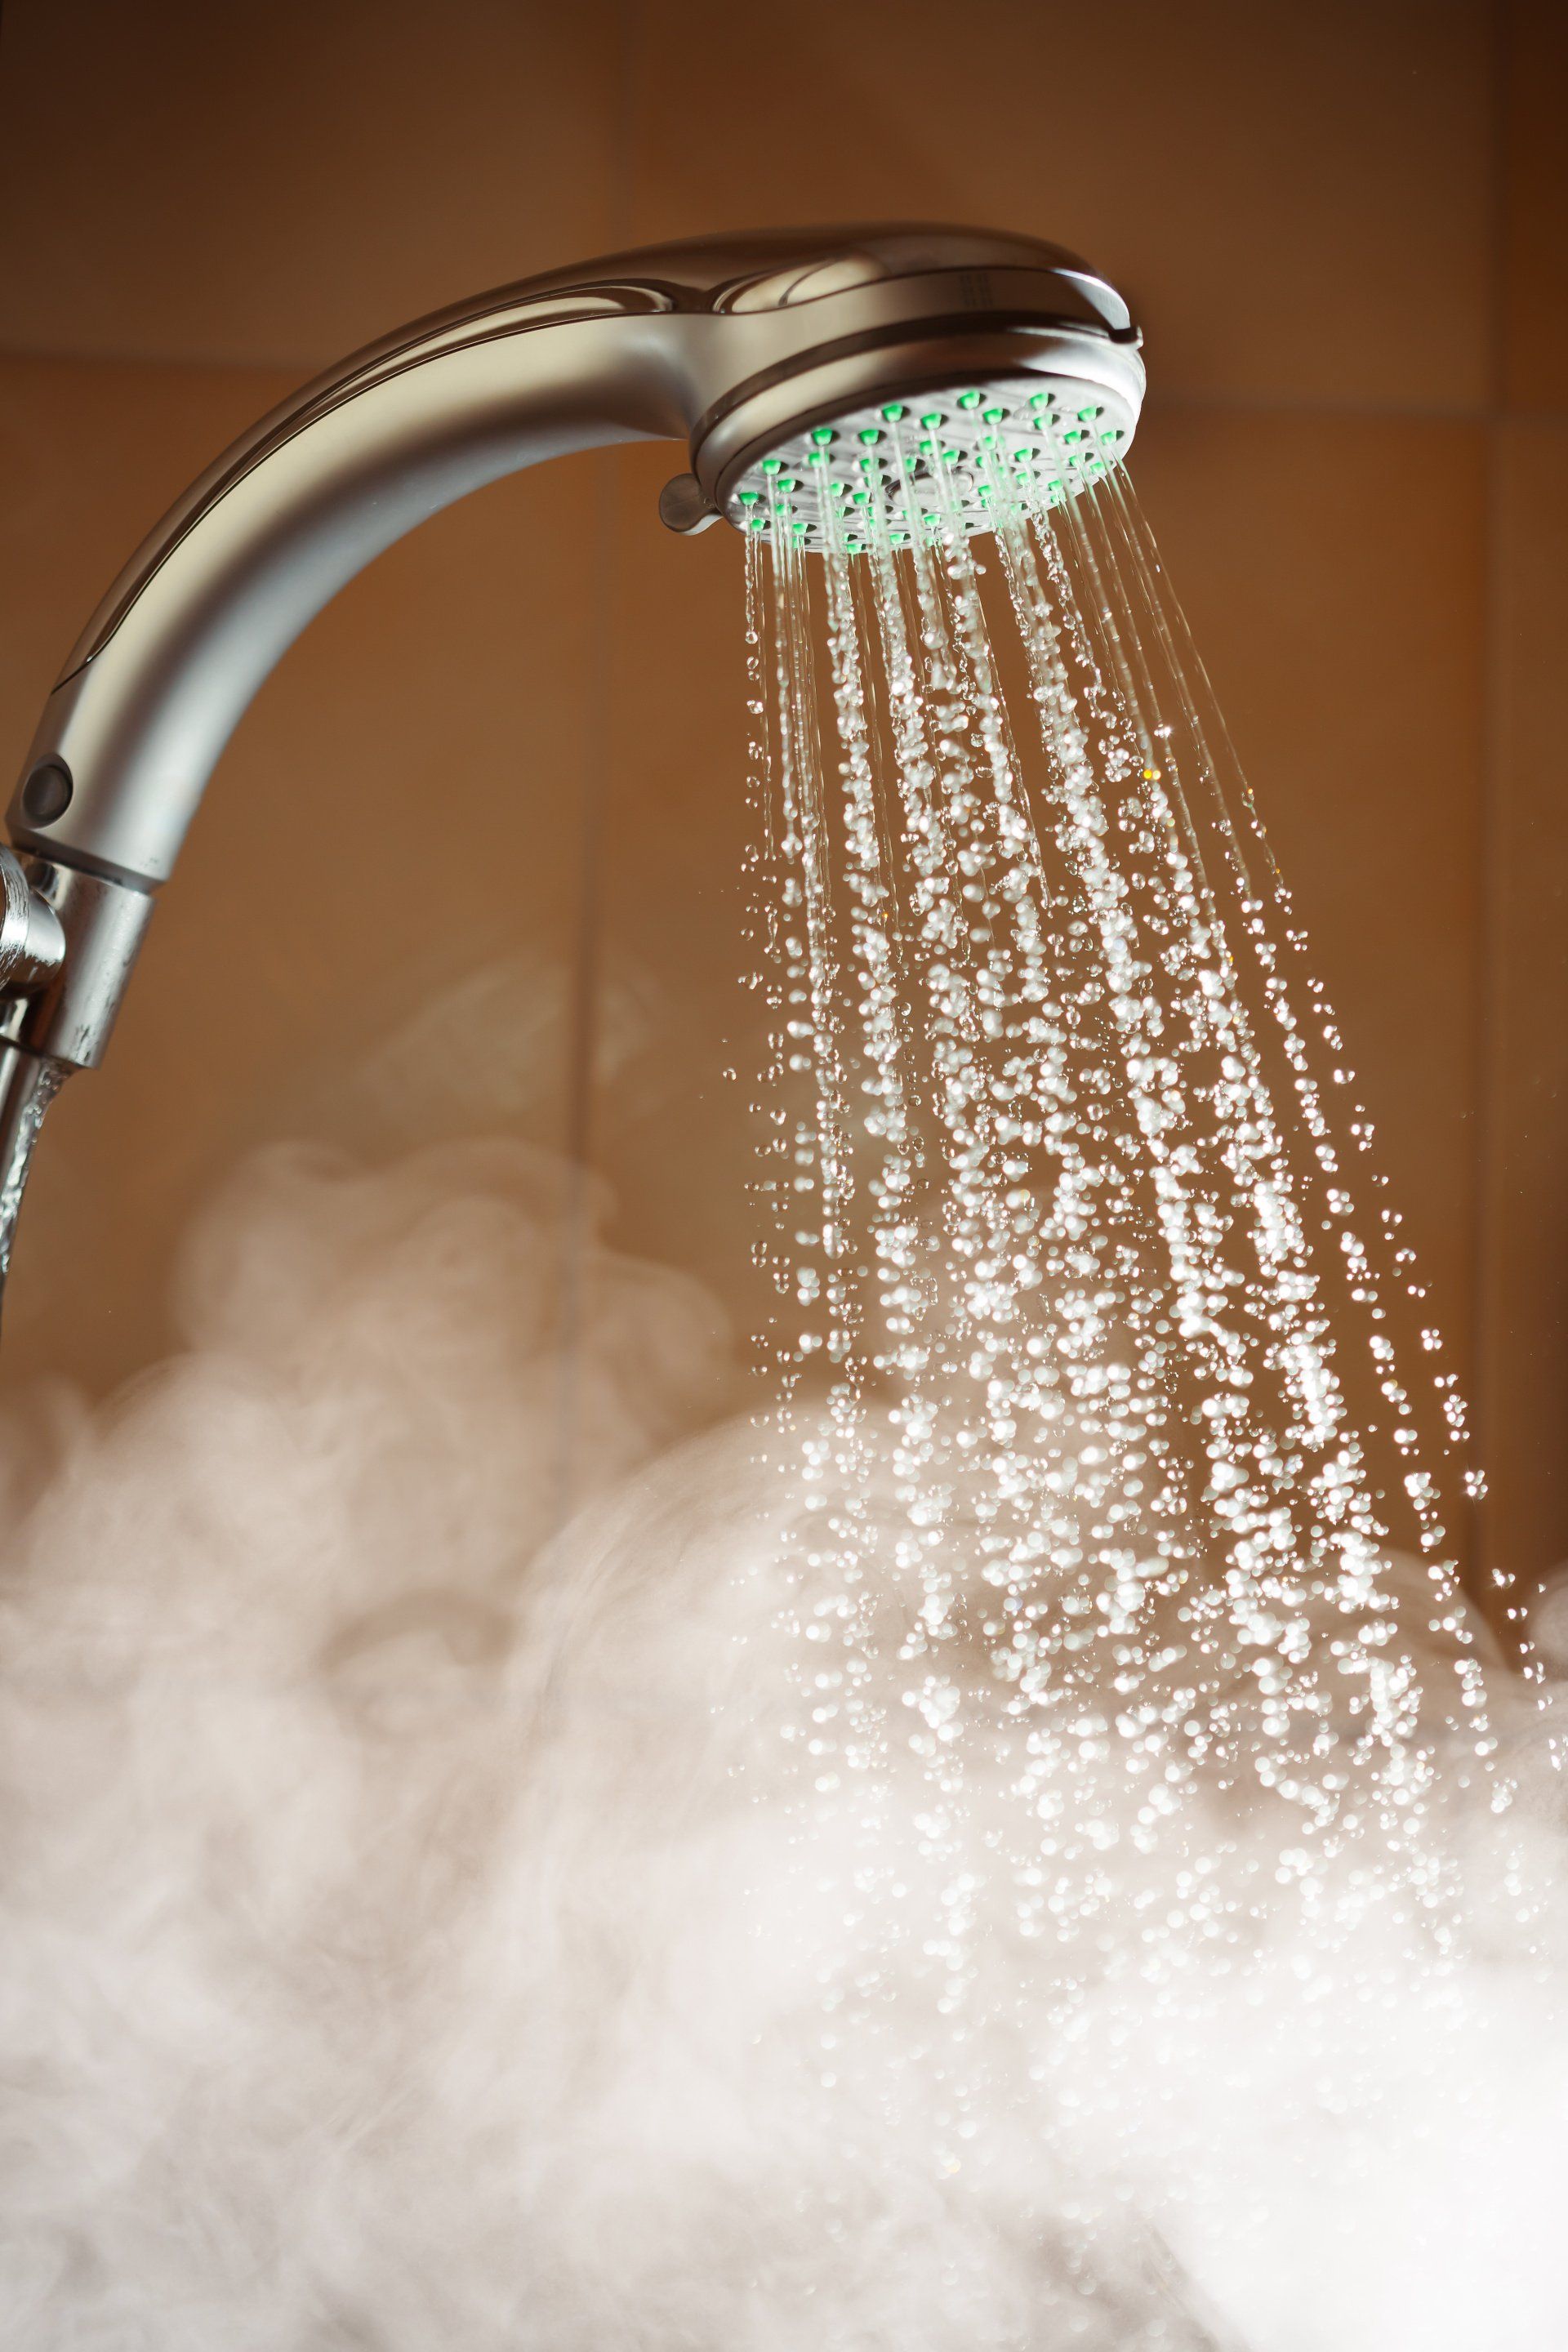 Steamy showerhead